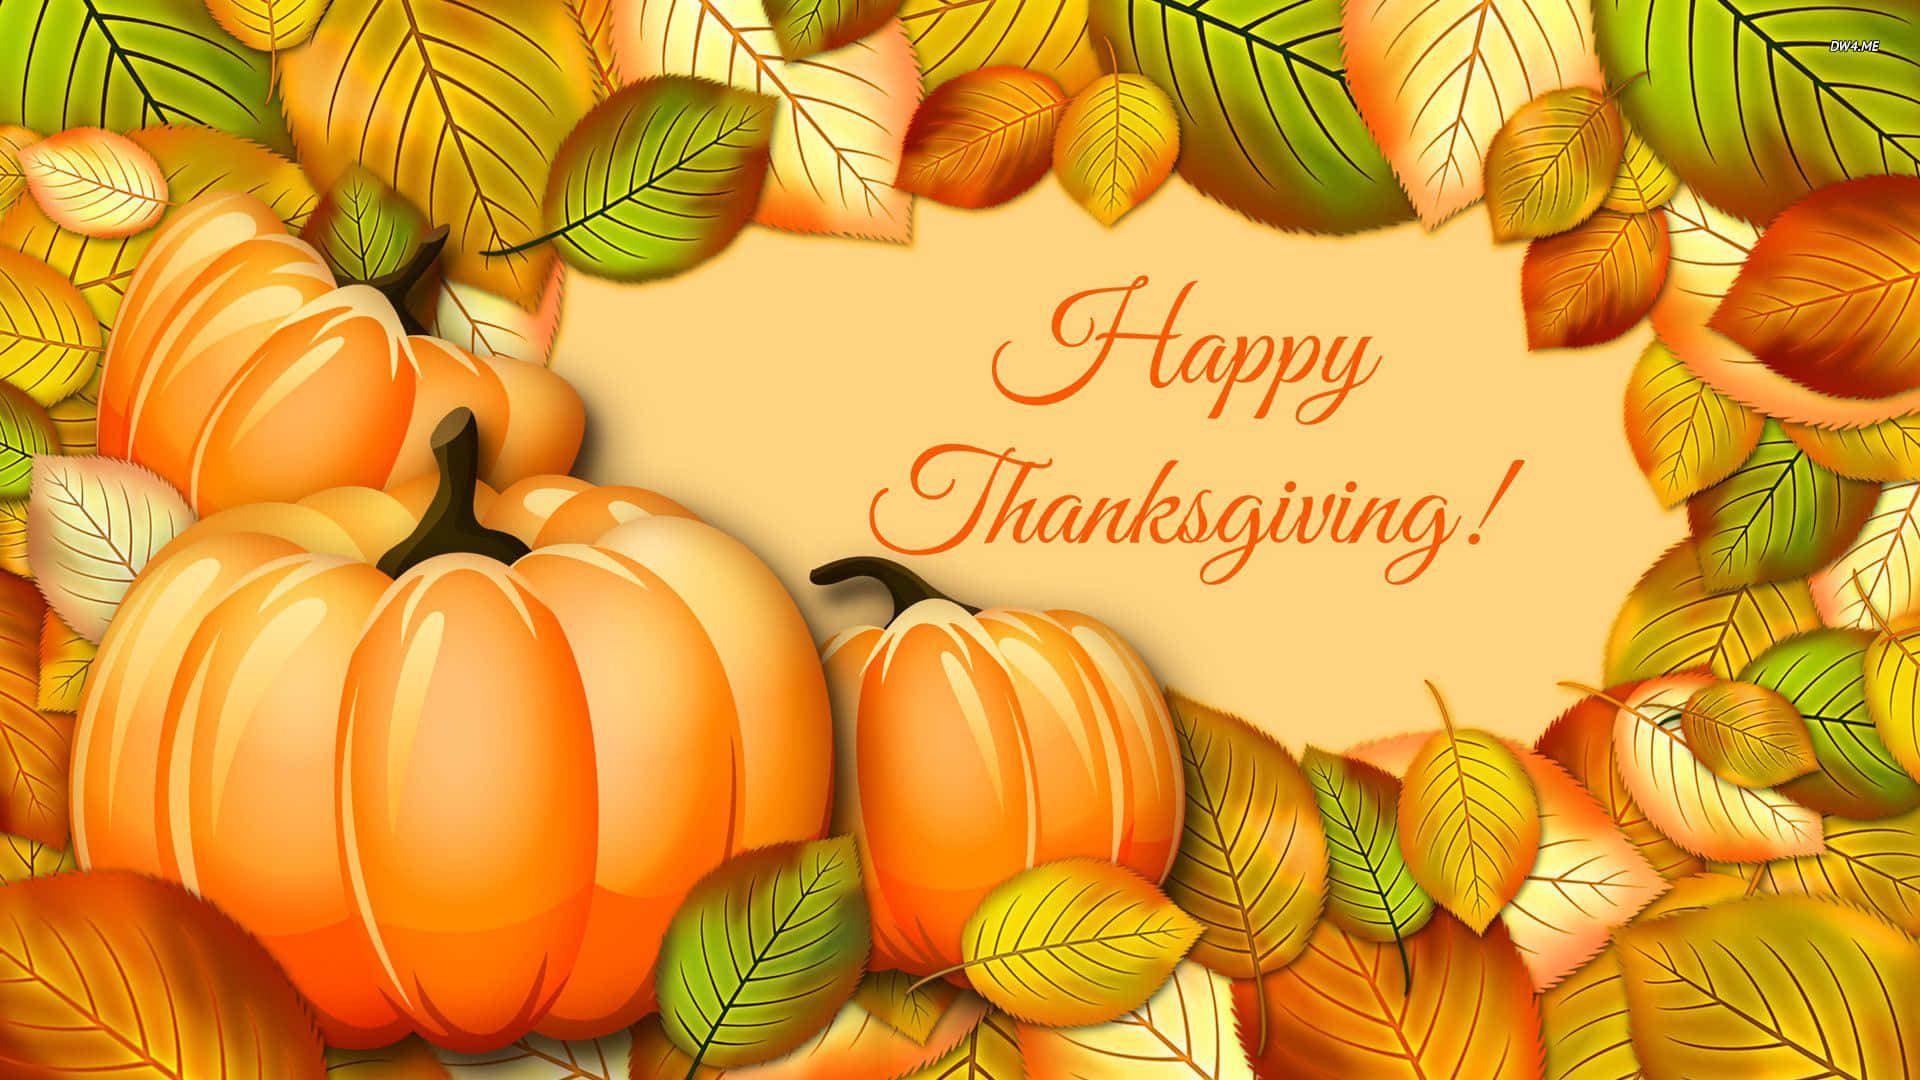 Glad Thanksgiving 1920 X 1080 Wallpaper